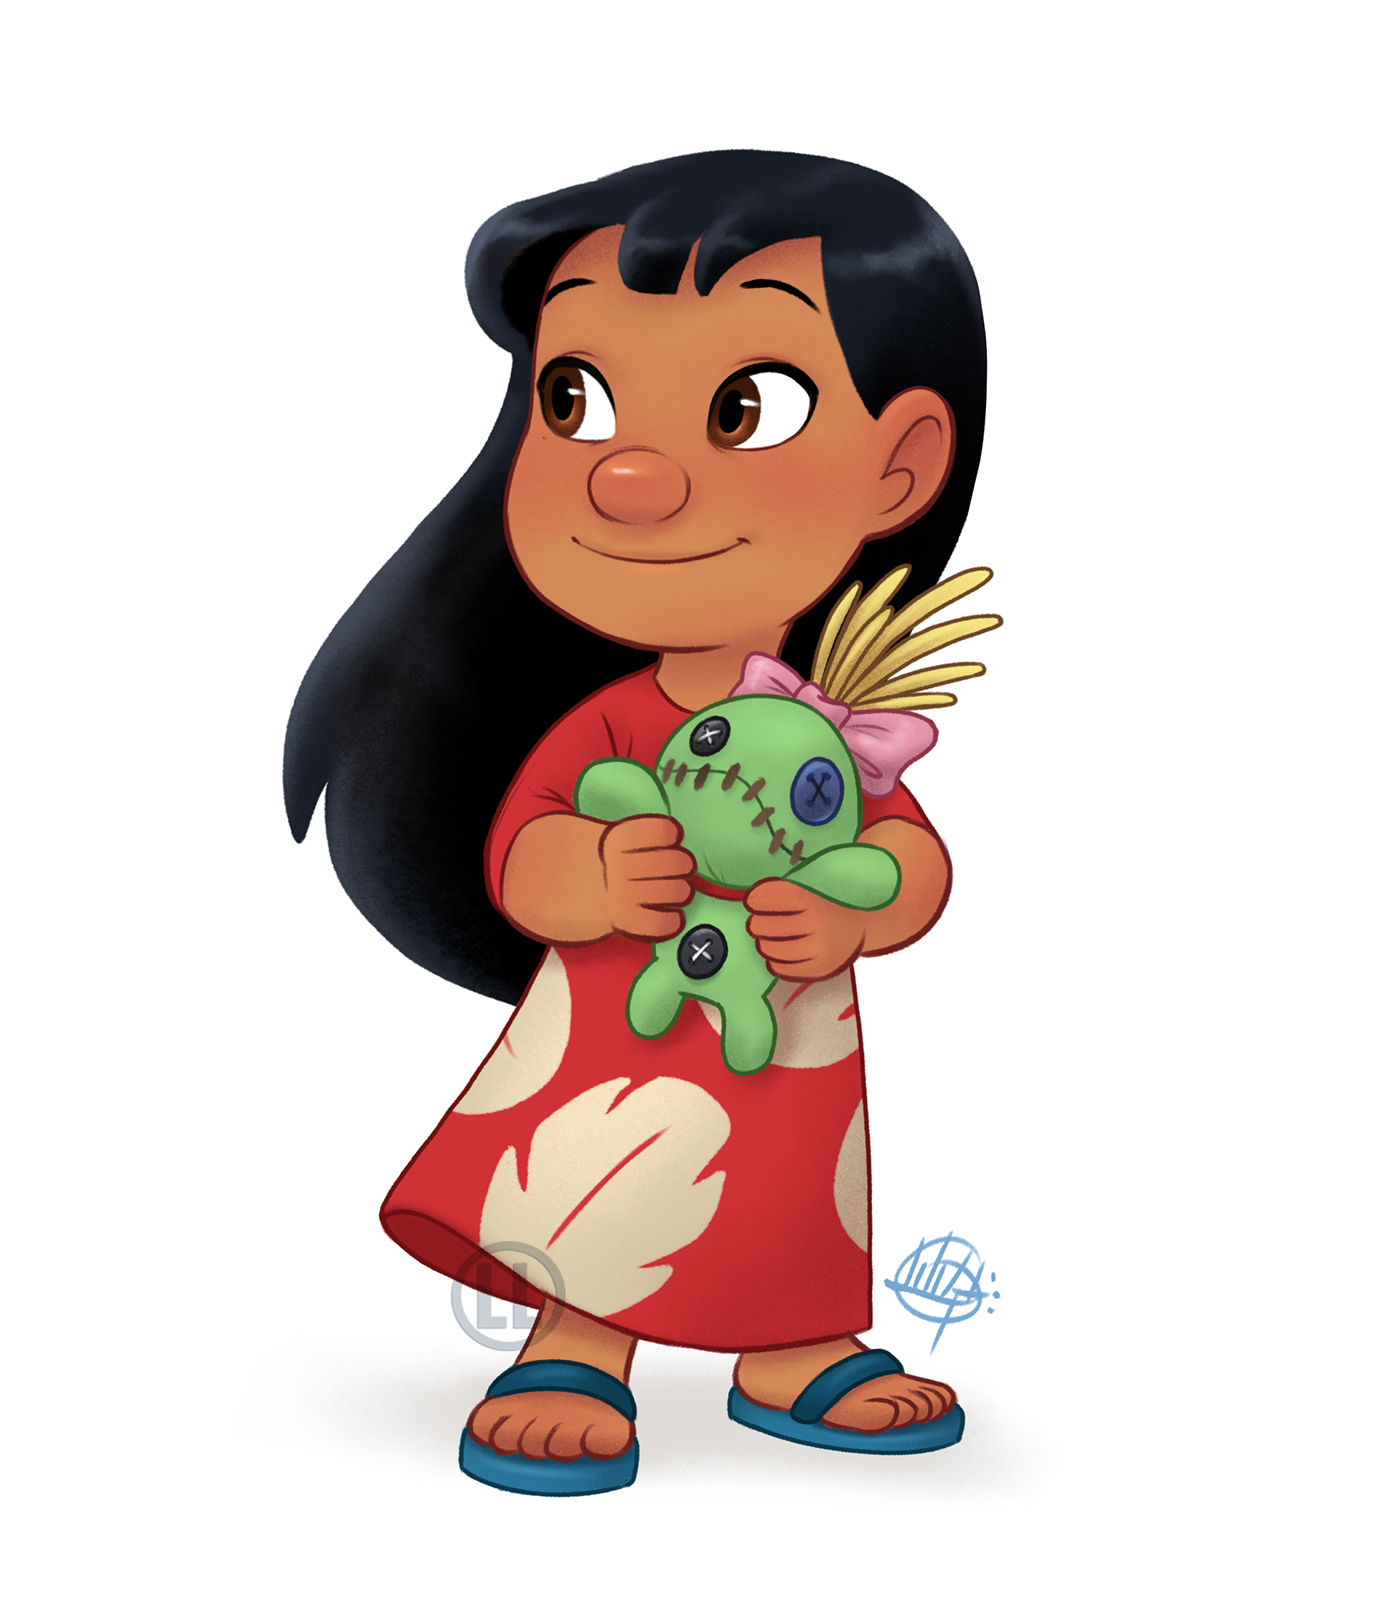 Disney Princess Character design.